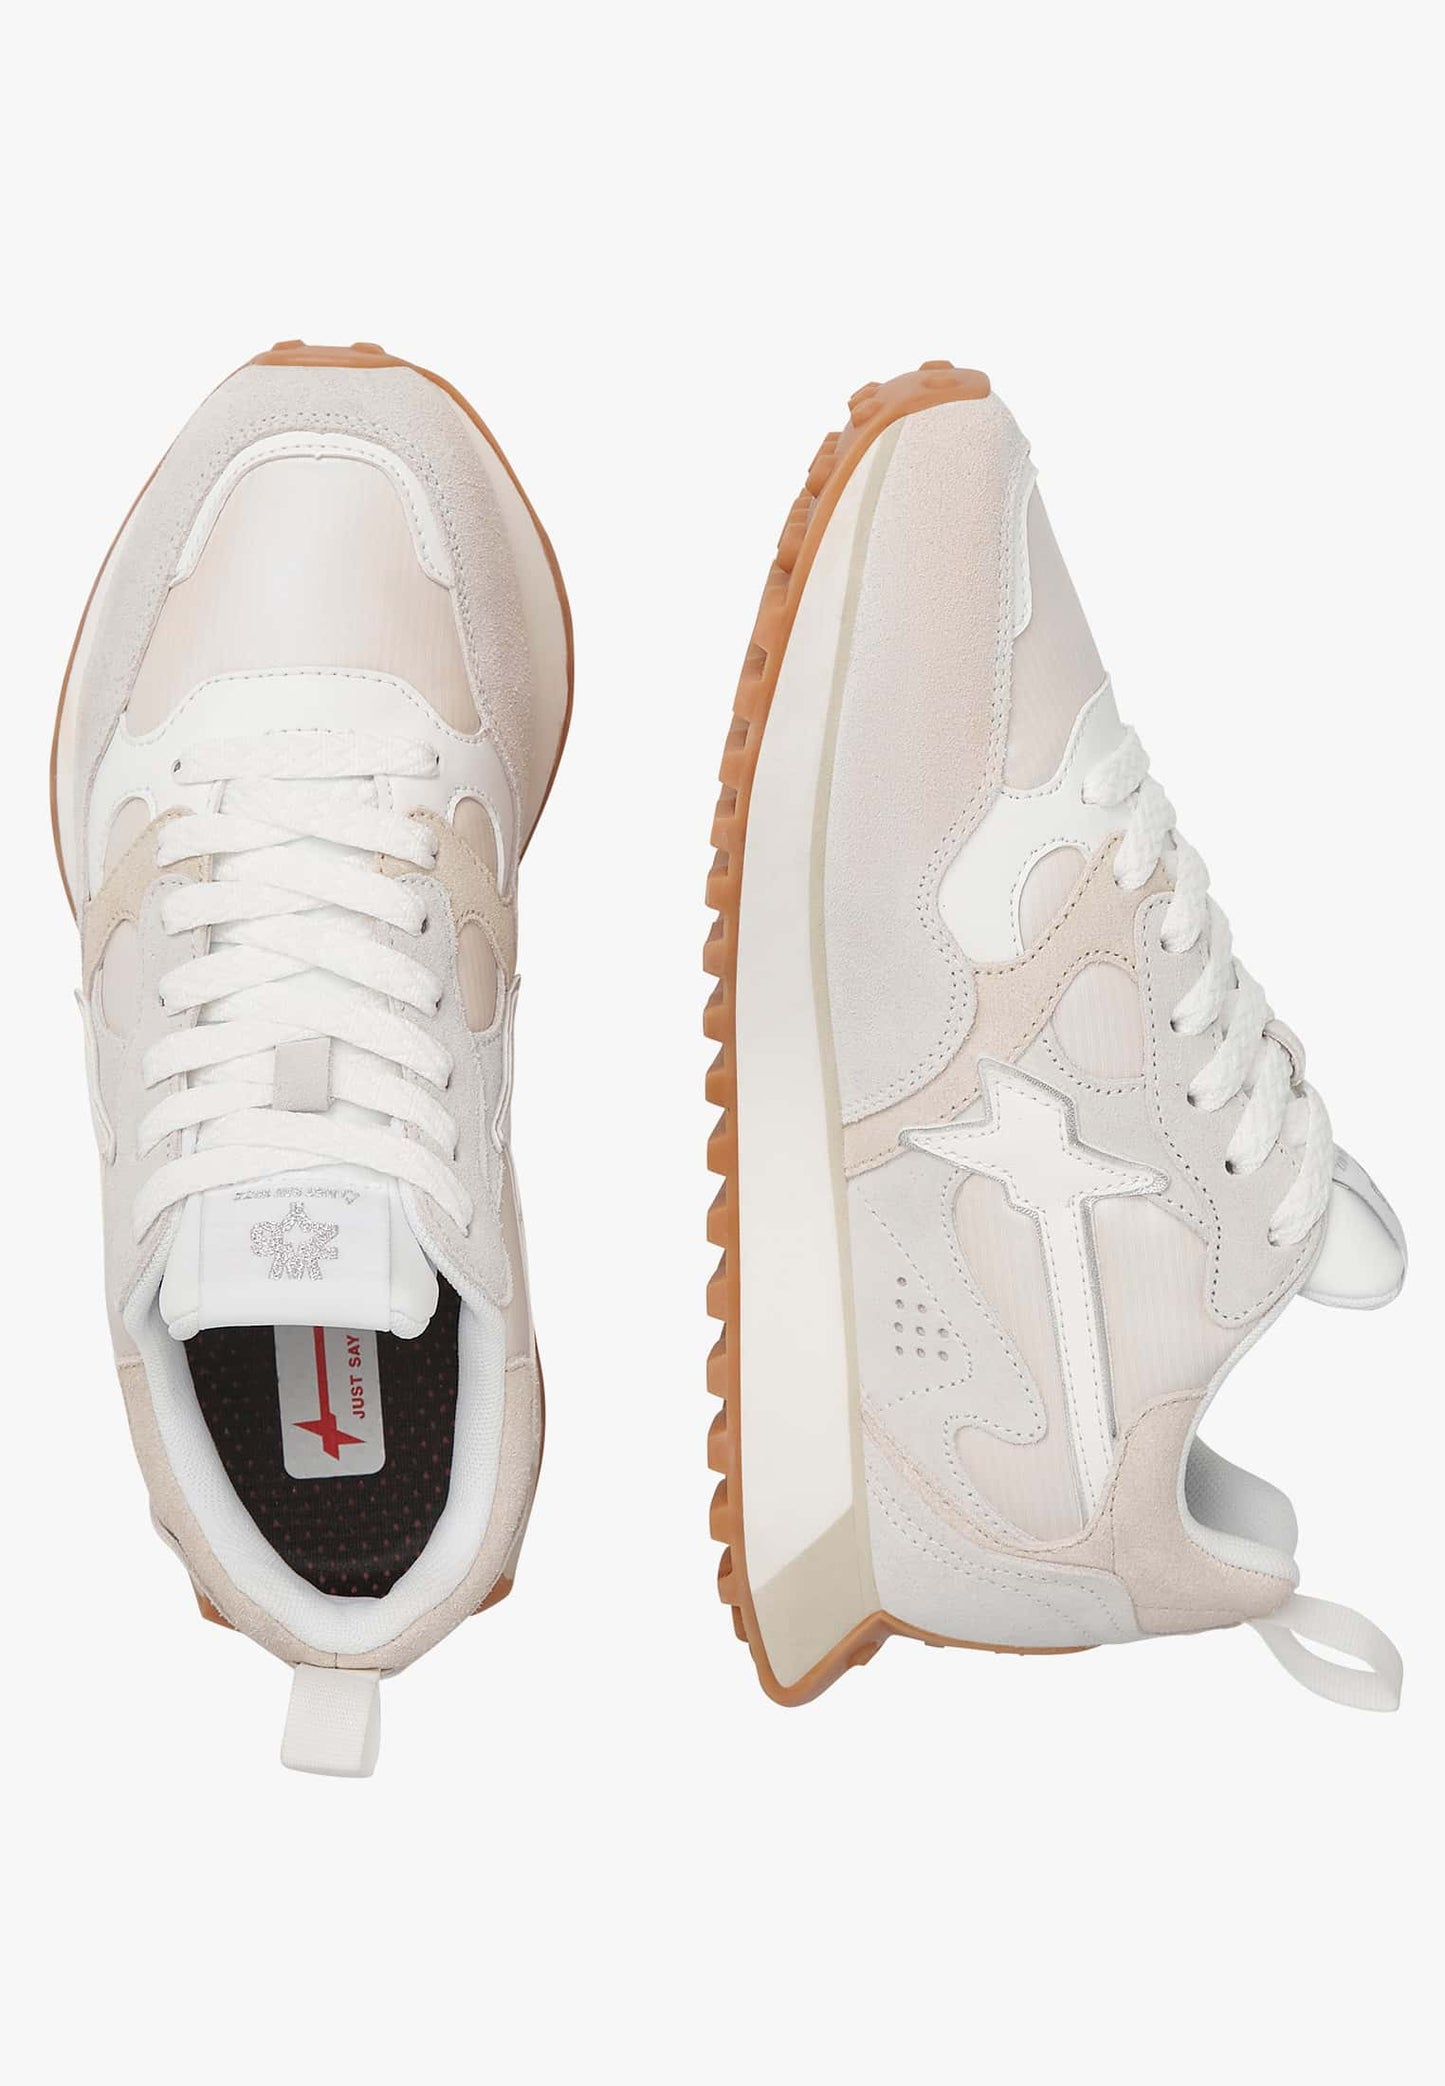 W6yz scarpa donna home  loop-uni. - sneakers in suede e tessuto tecnico - White-Beige
2018285061N30